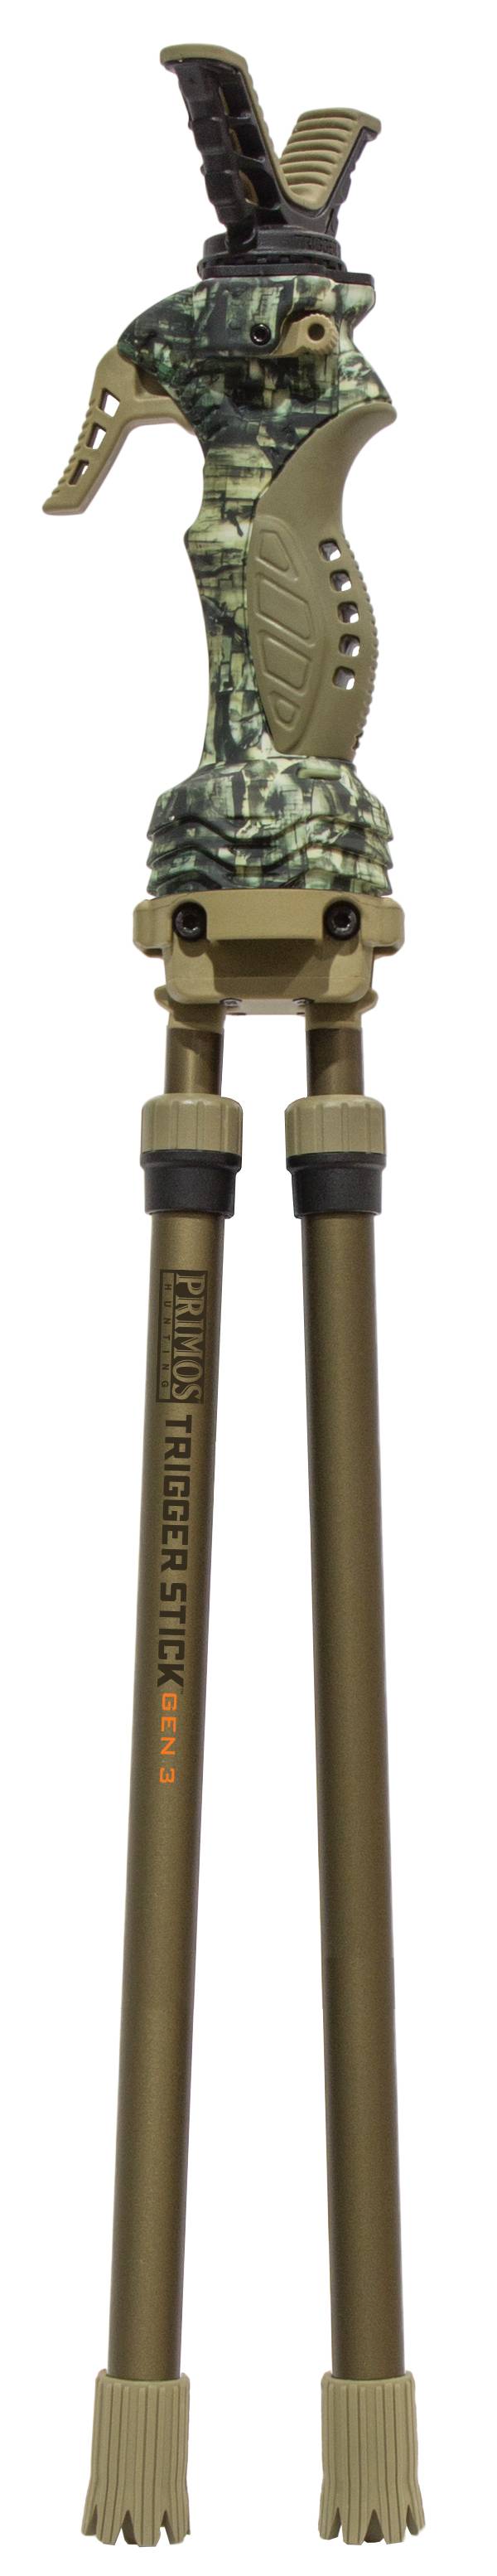 Primos Gen 3 Trigger Stick Tripod Rifle Shooting Rest for sale online 